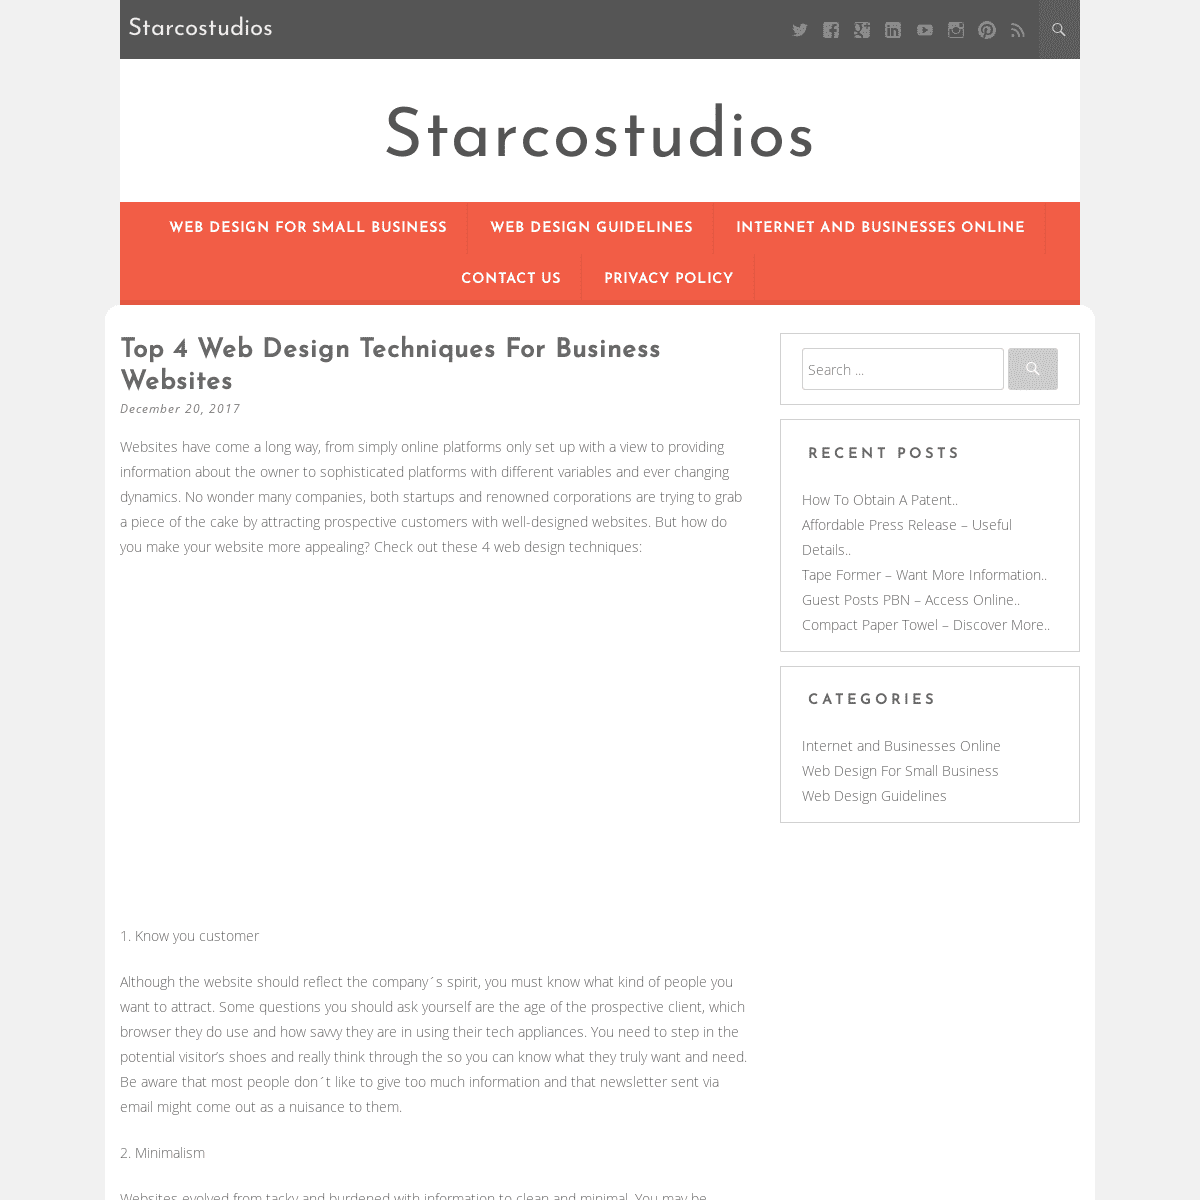 A complete backup of https://starcostudios.com